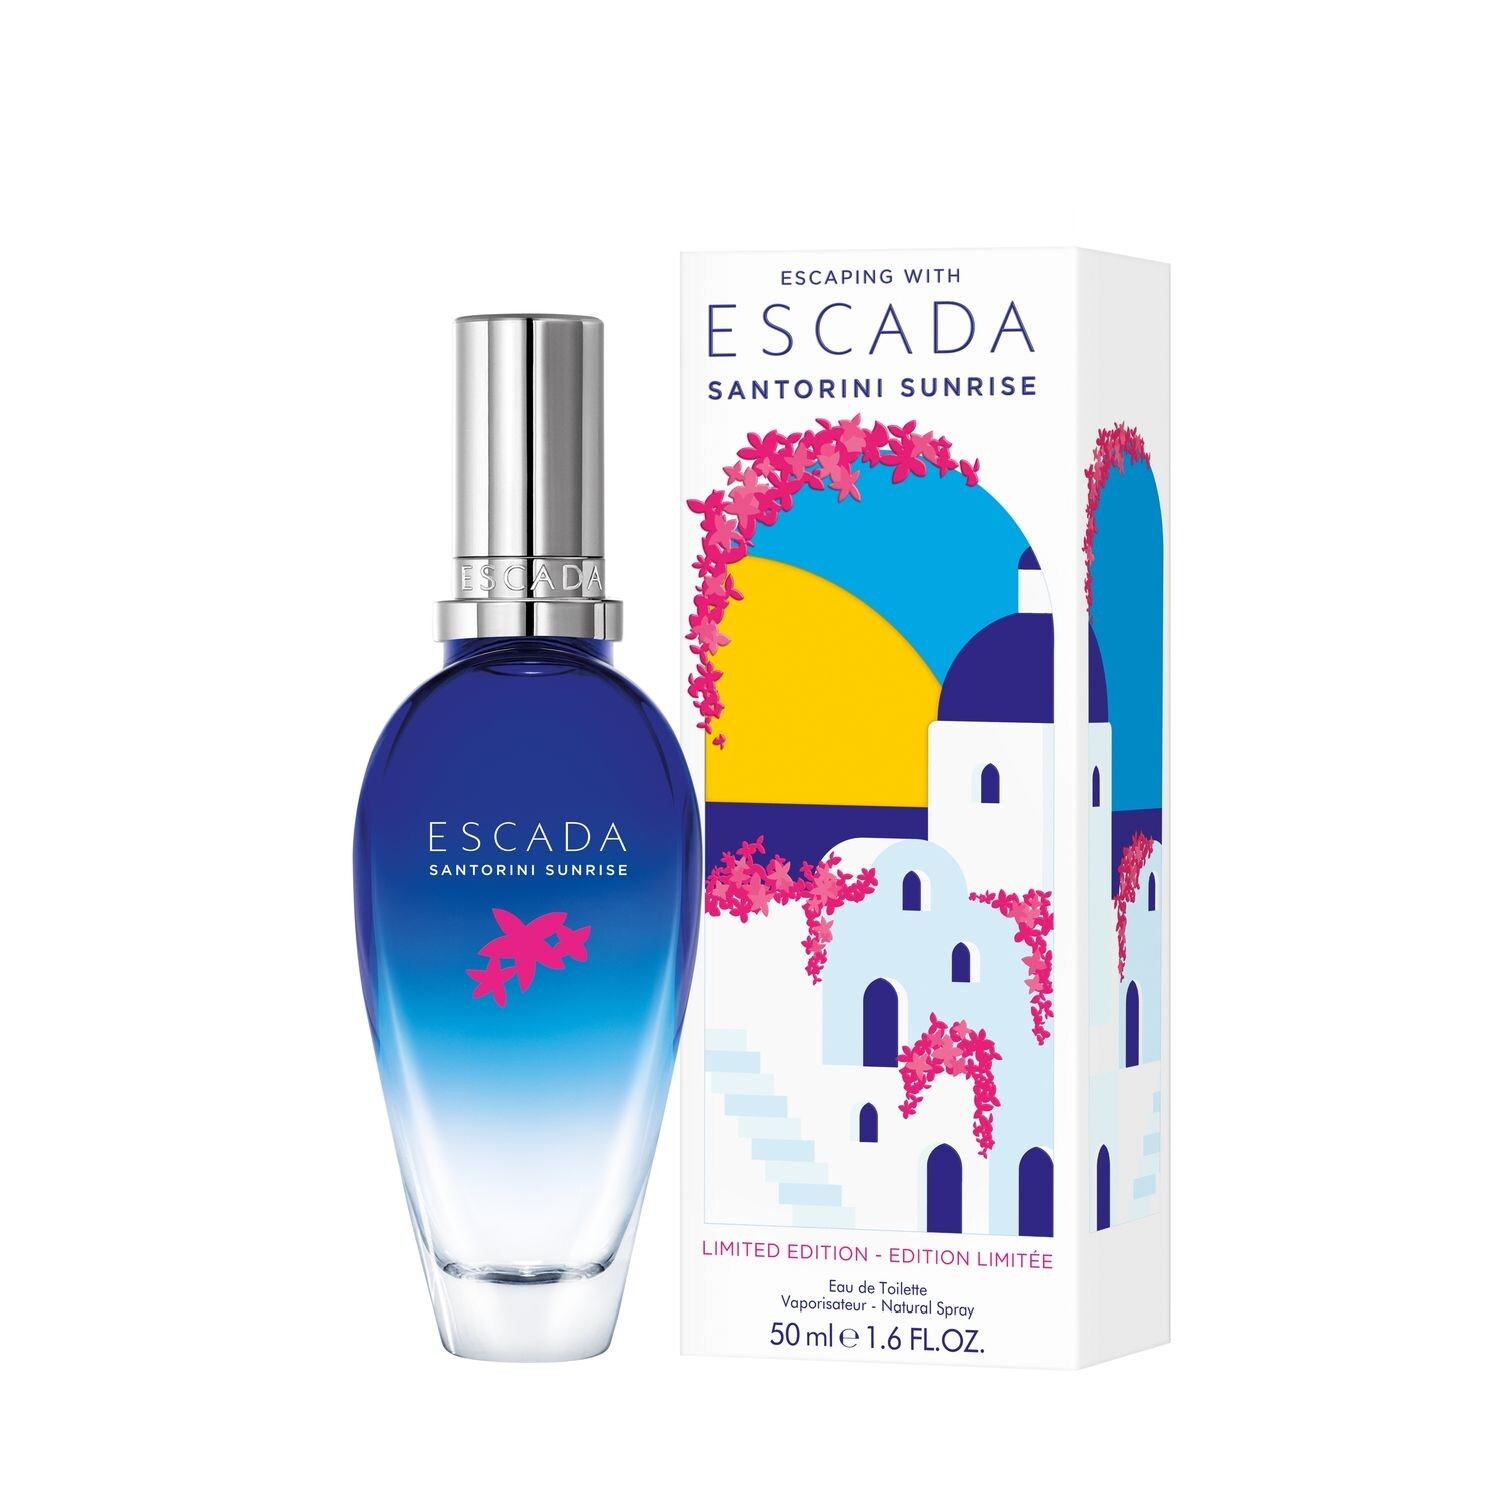 Escada Santorini Sunrise EDT Limited Edition 50ml